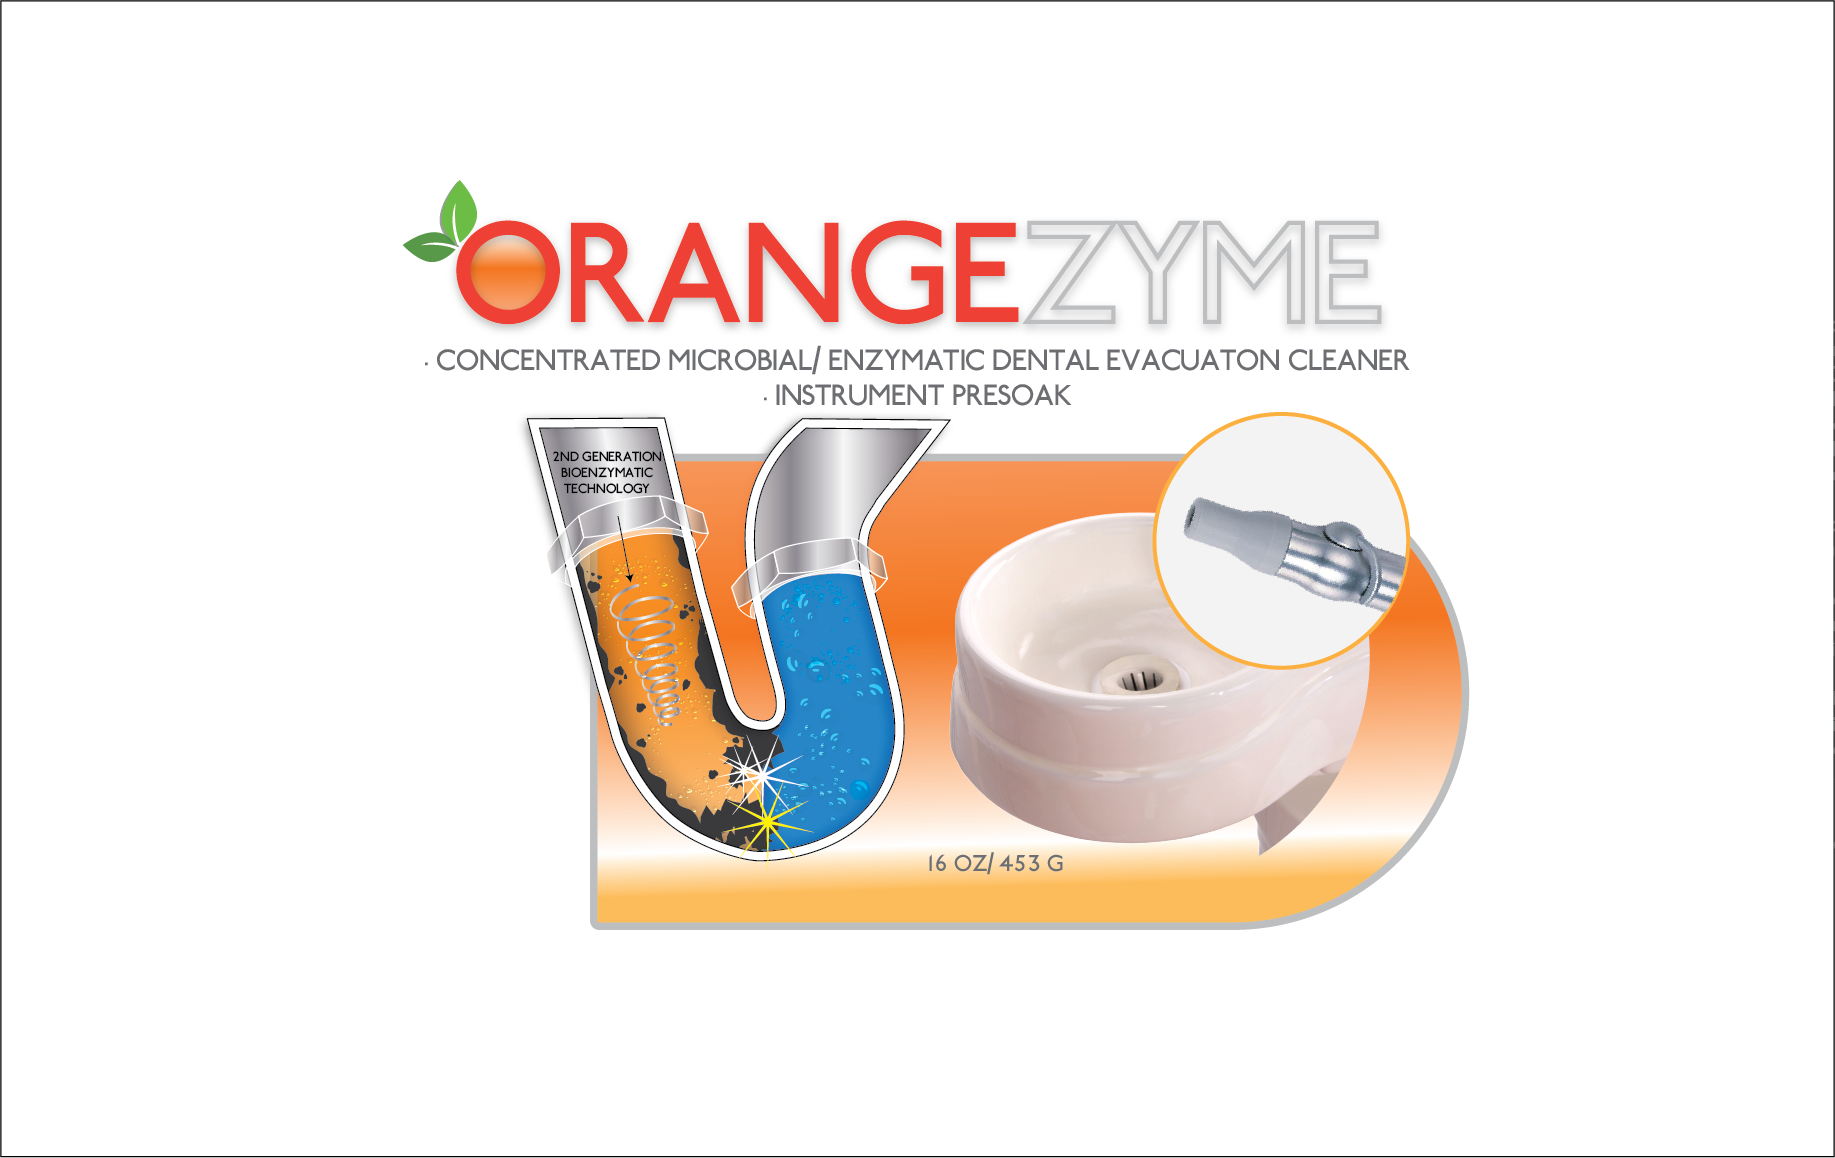 OrangeZyme Evacuation Cleaner and Presoak